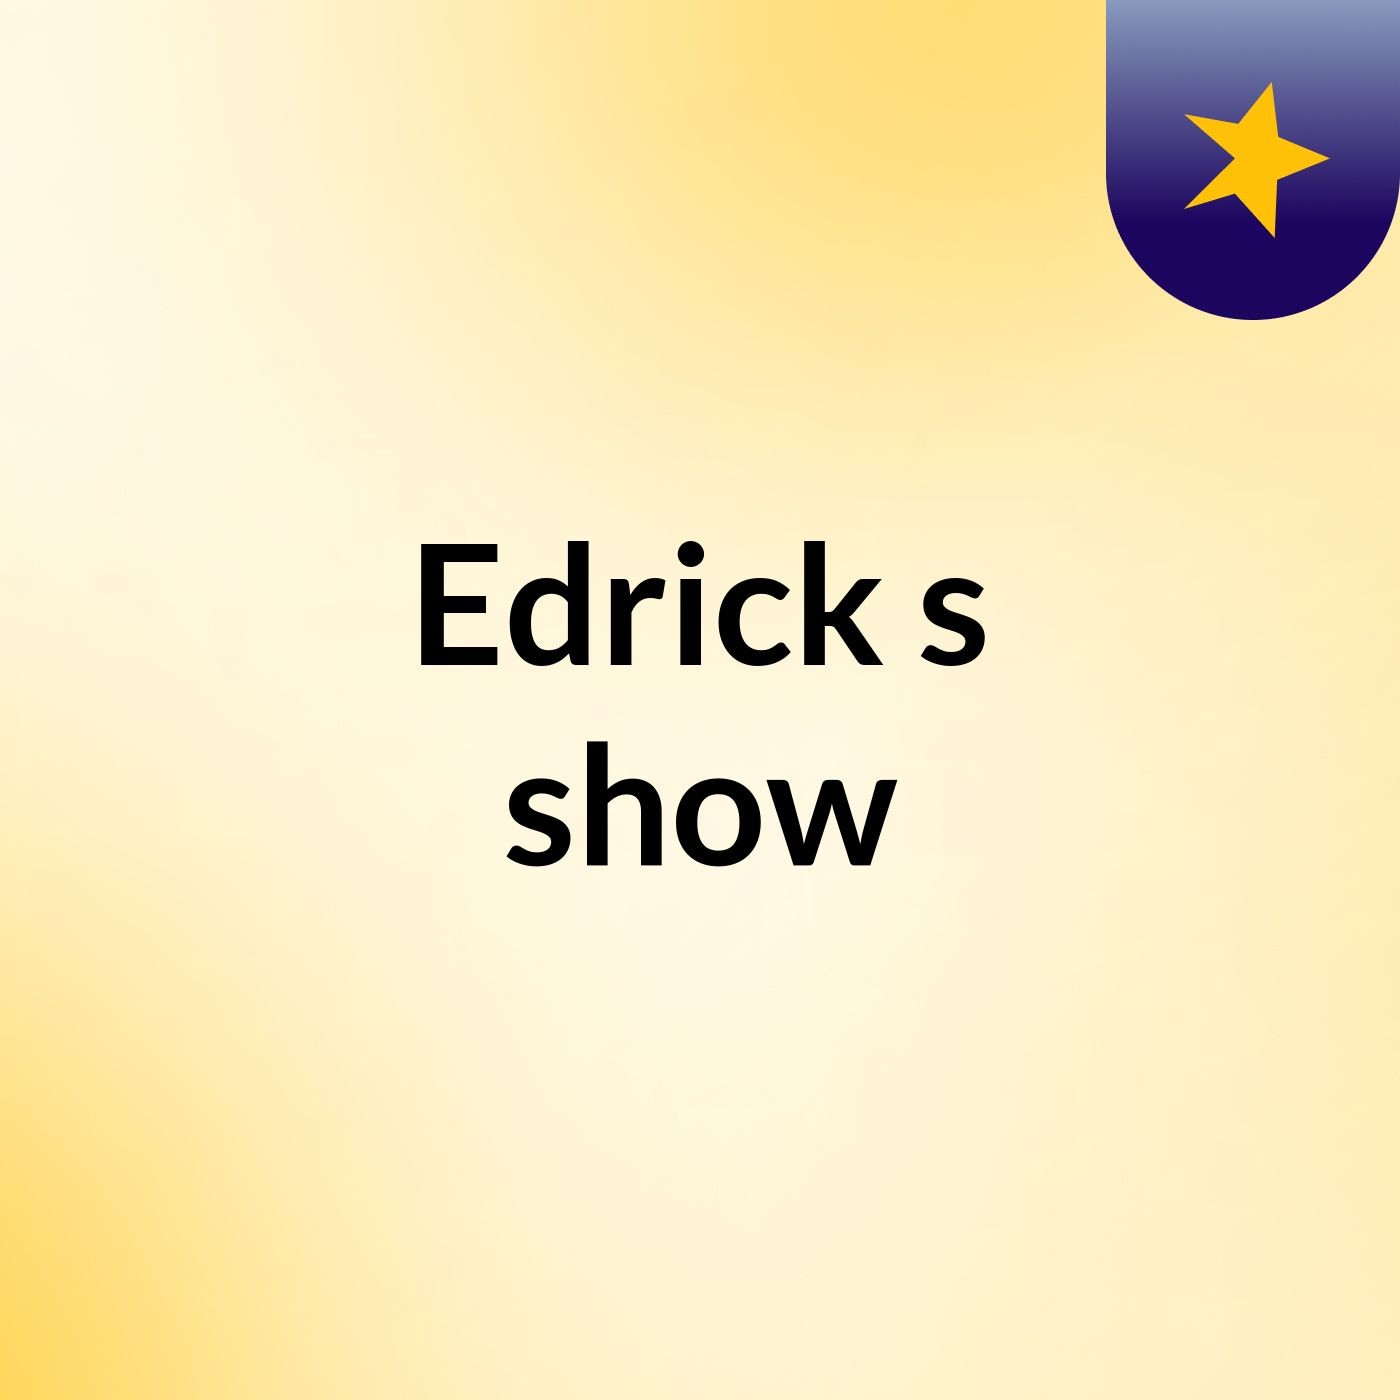 Edrick's show